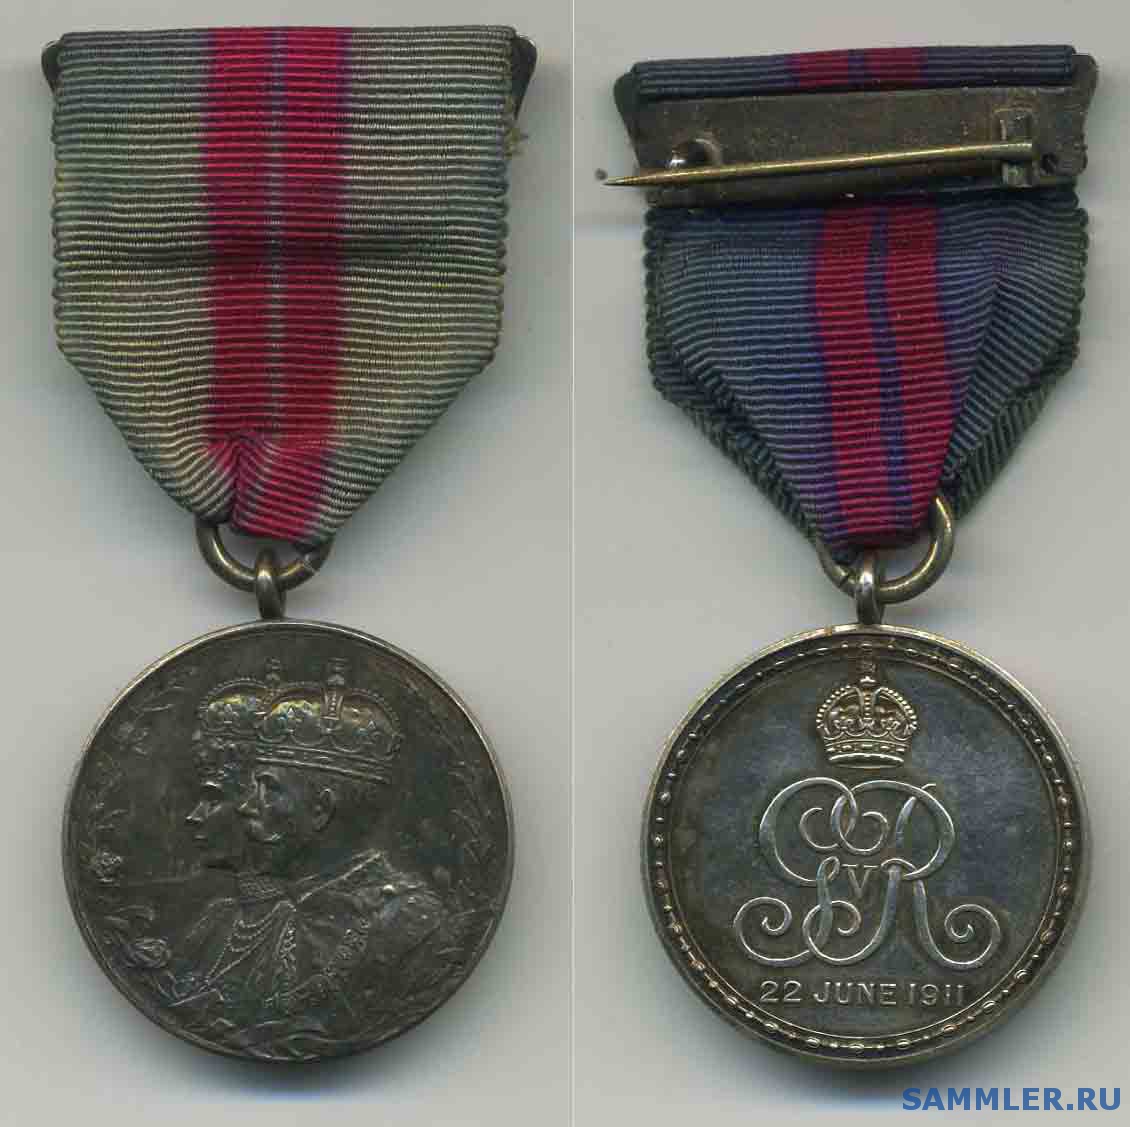 Coronation_1911_Medal.jpg